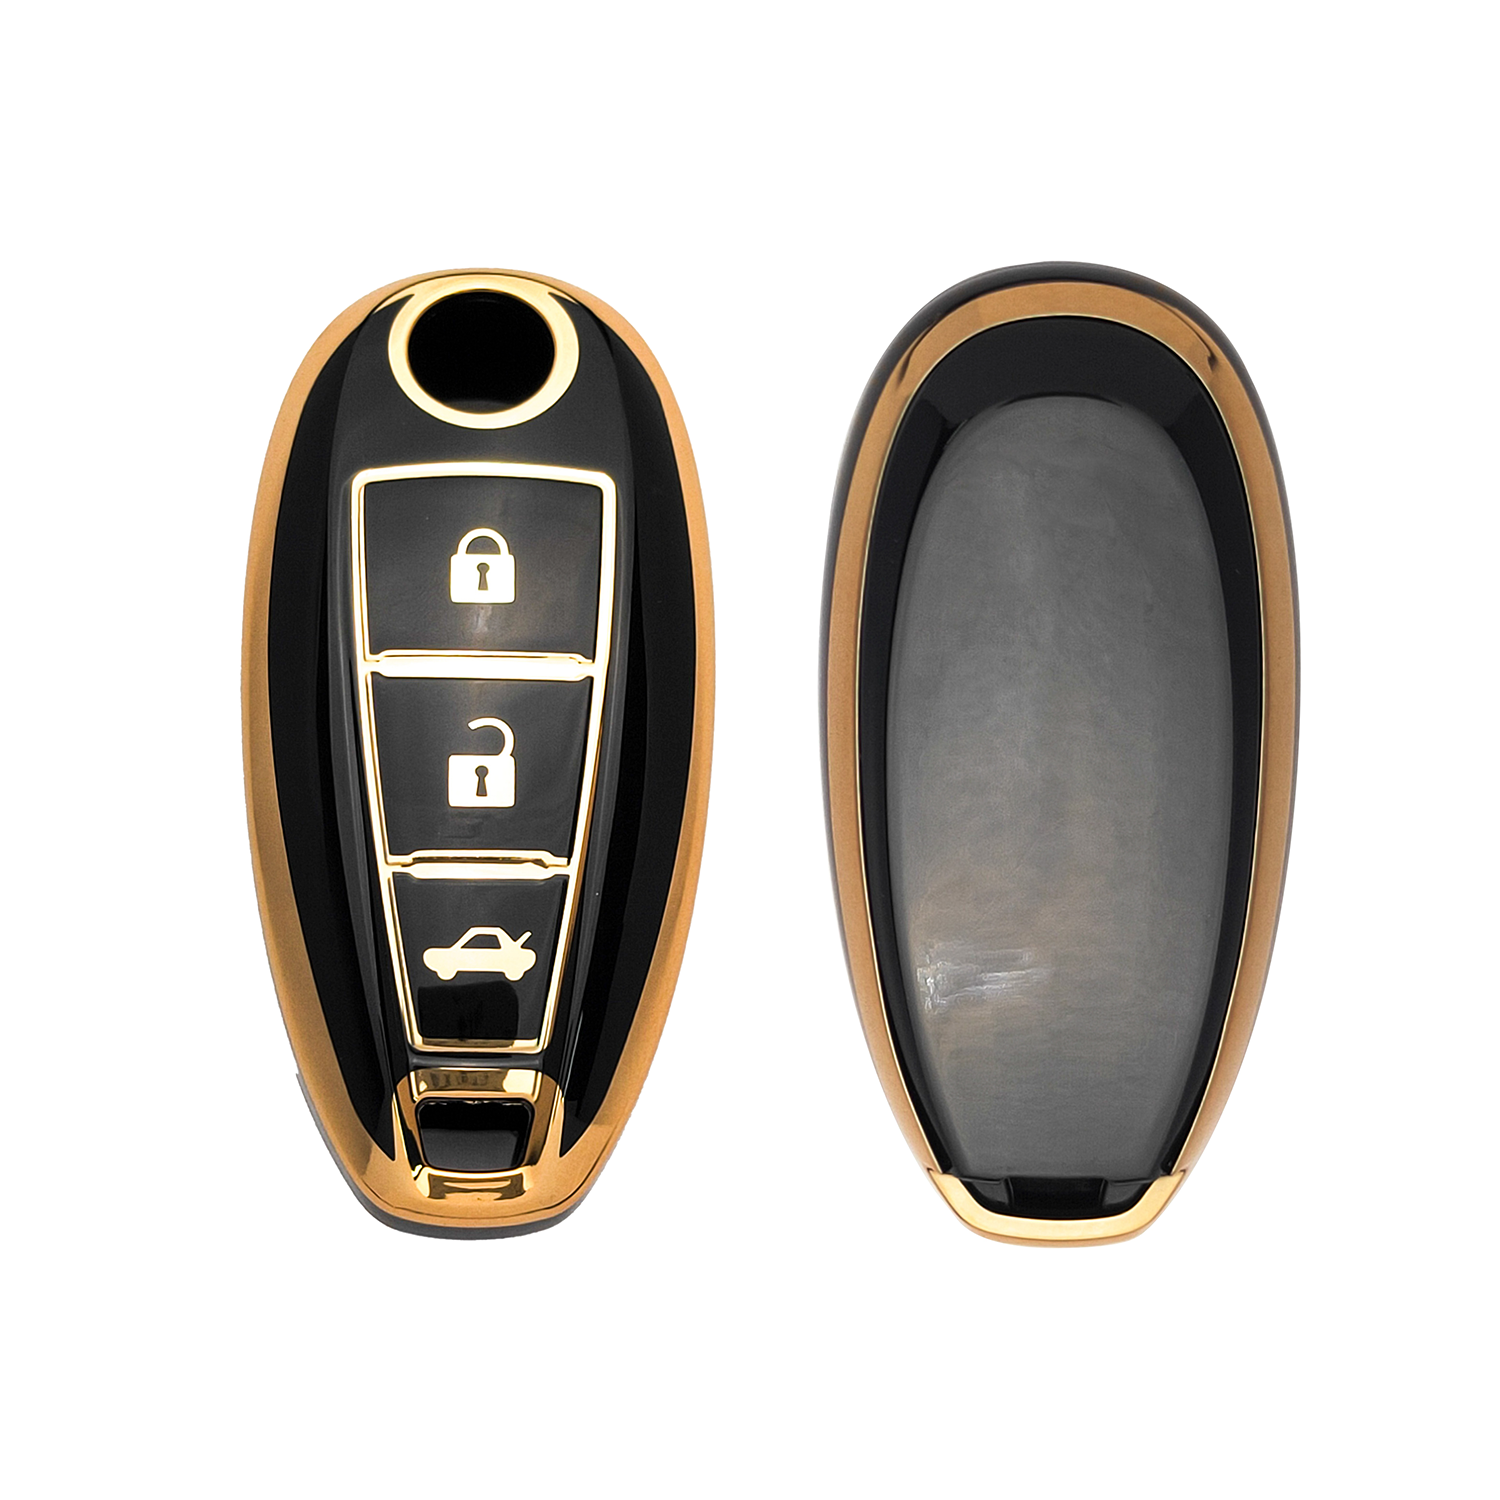 Acto TPU Gold Series Car Key Cover With TPU Gold Key Chain For Suzuki Ciaz